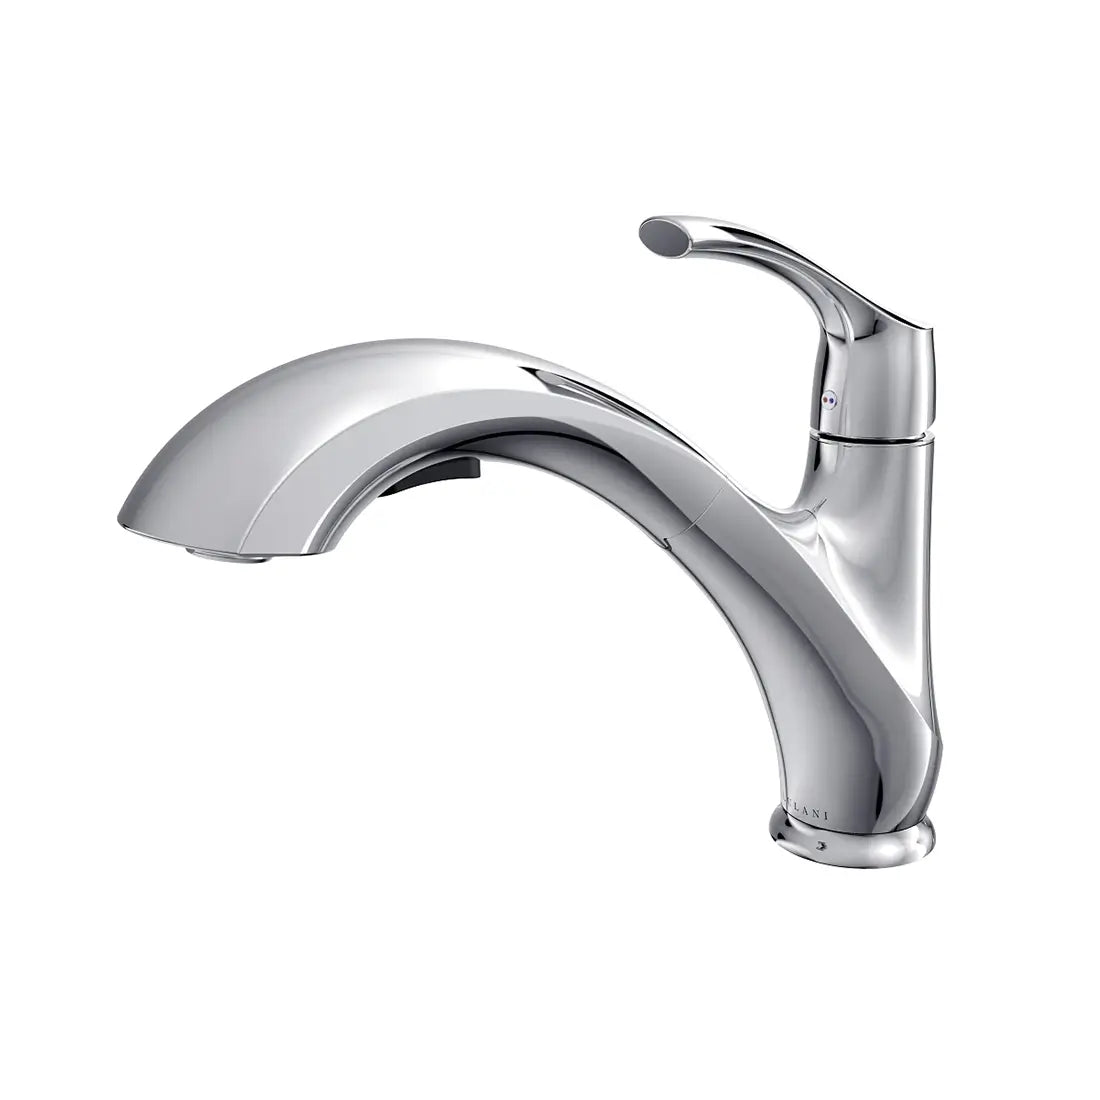 Maldives - Low Profile Pull-Out Kitchen Faucet Chrome